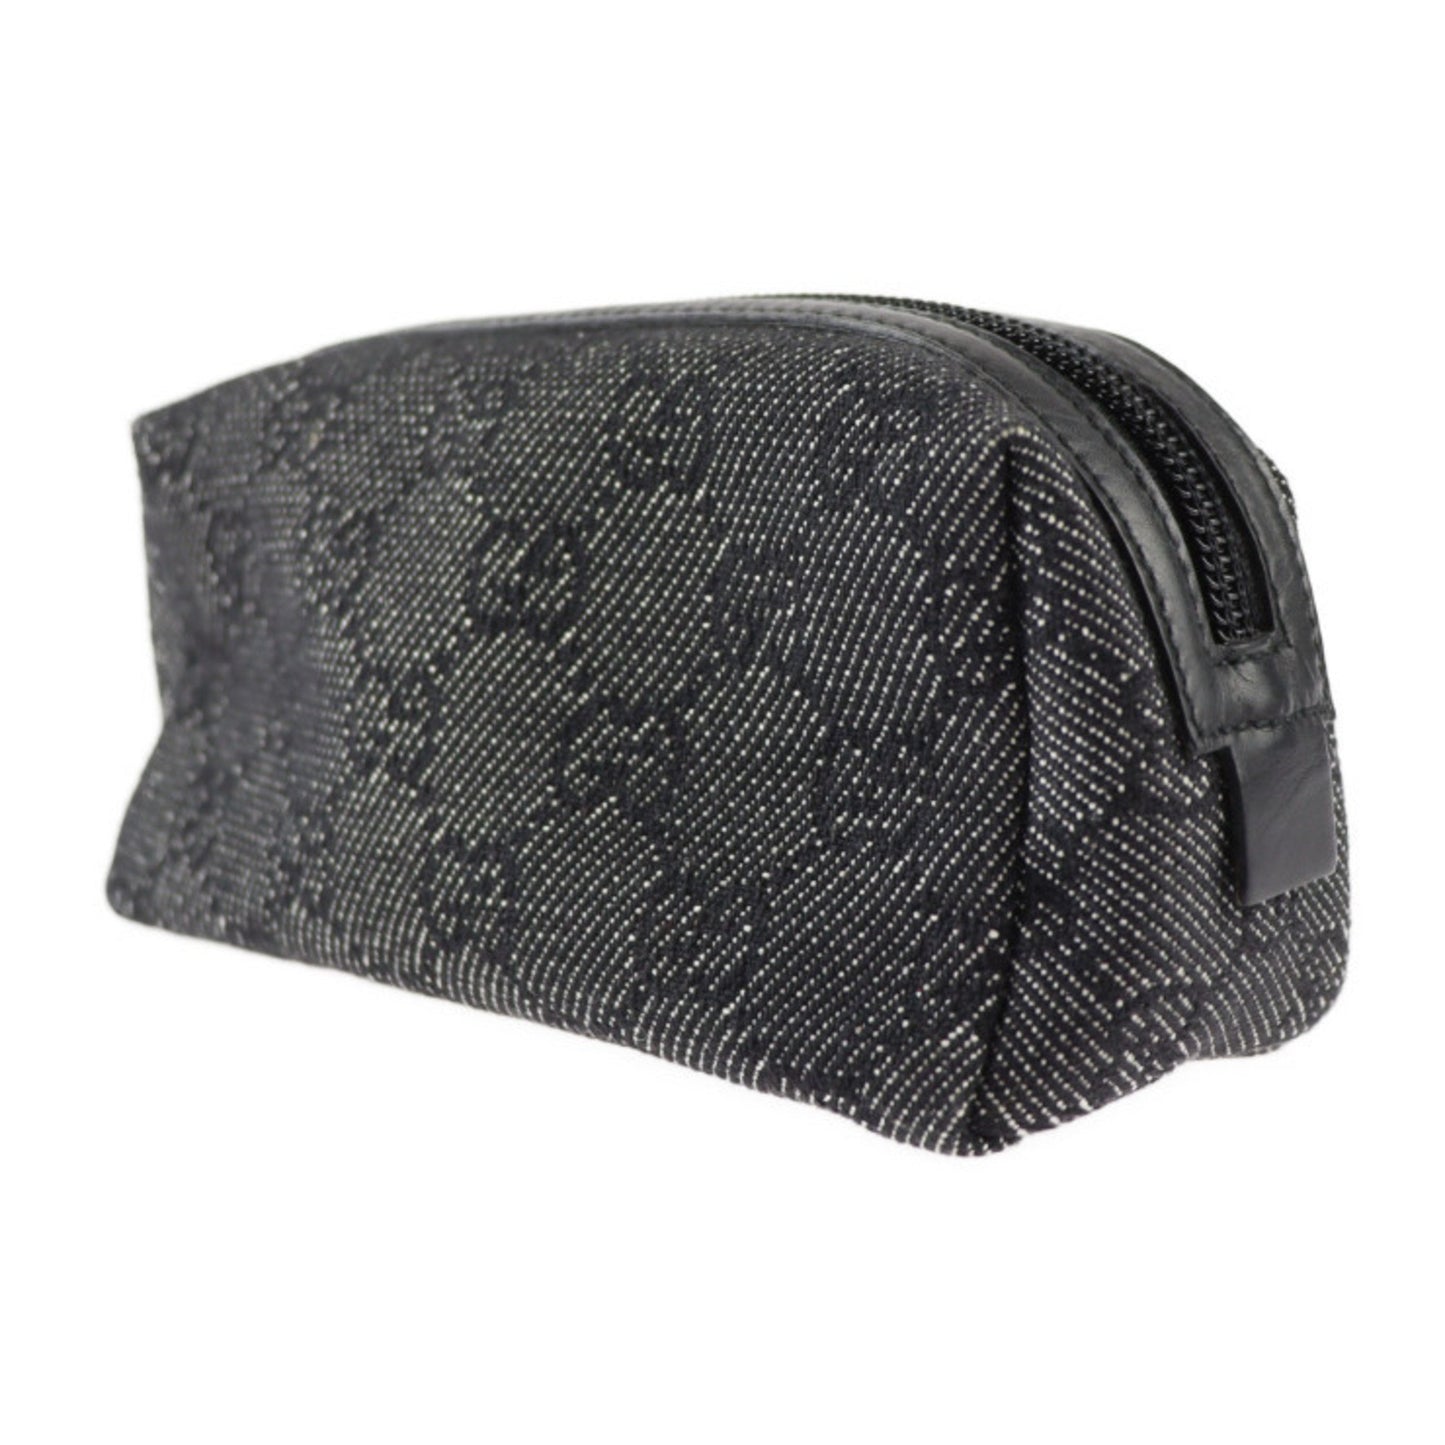 Gucci Unisex Black Canvas Zipper Pouch in Black